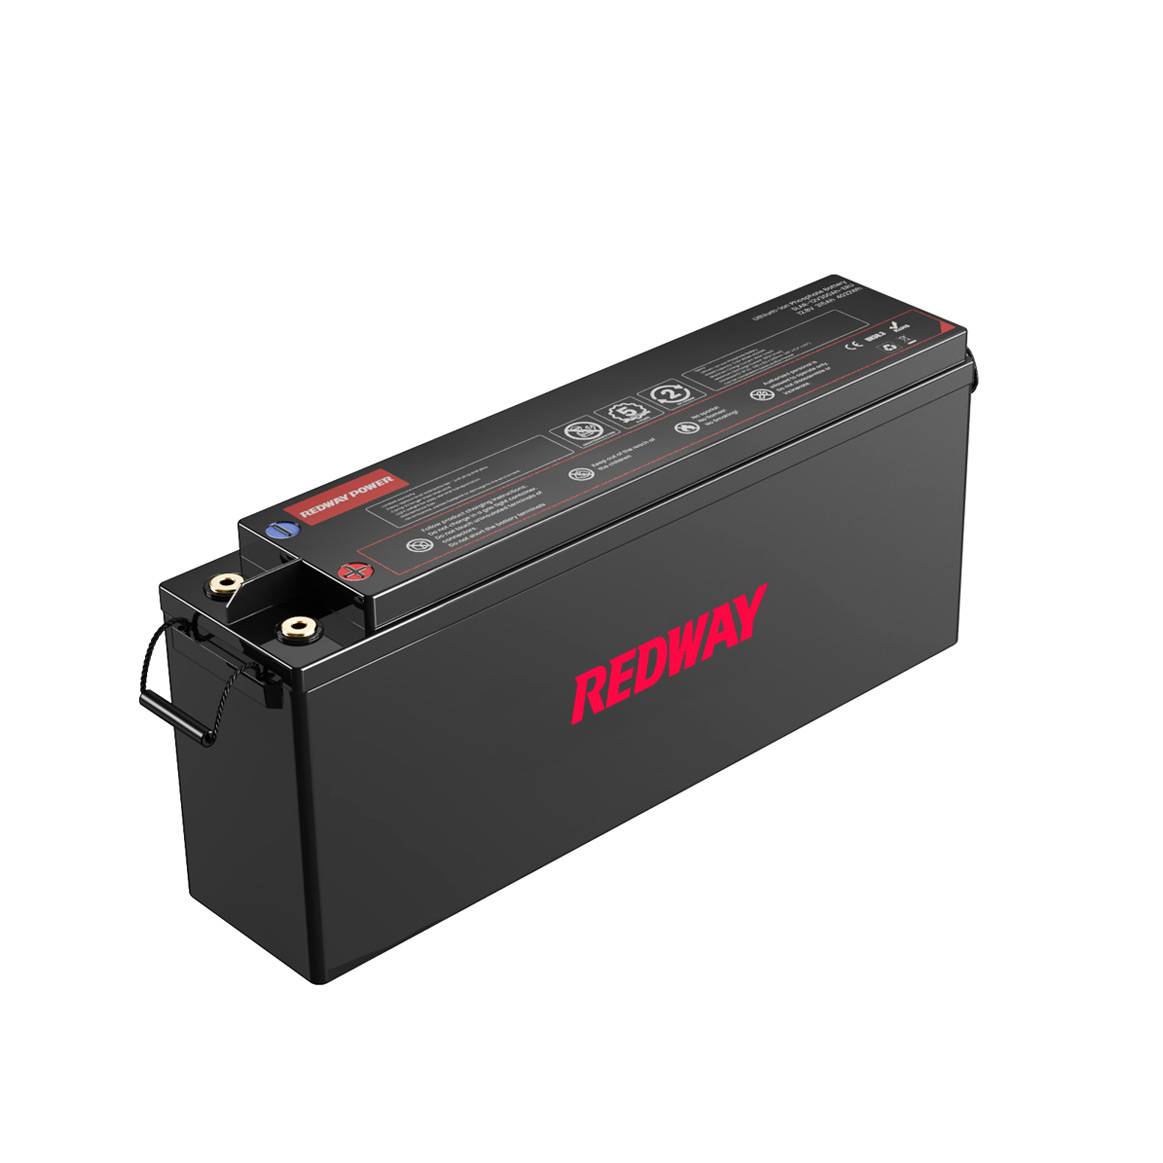 redway-12v180ah-eu China Lithium Iron Battery Manufacturer, LiFePO4/NCM Battery